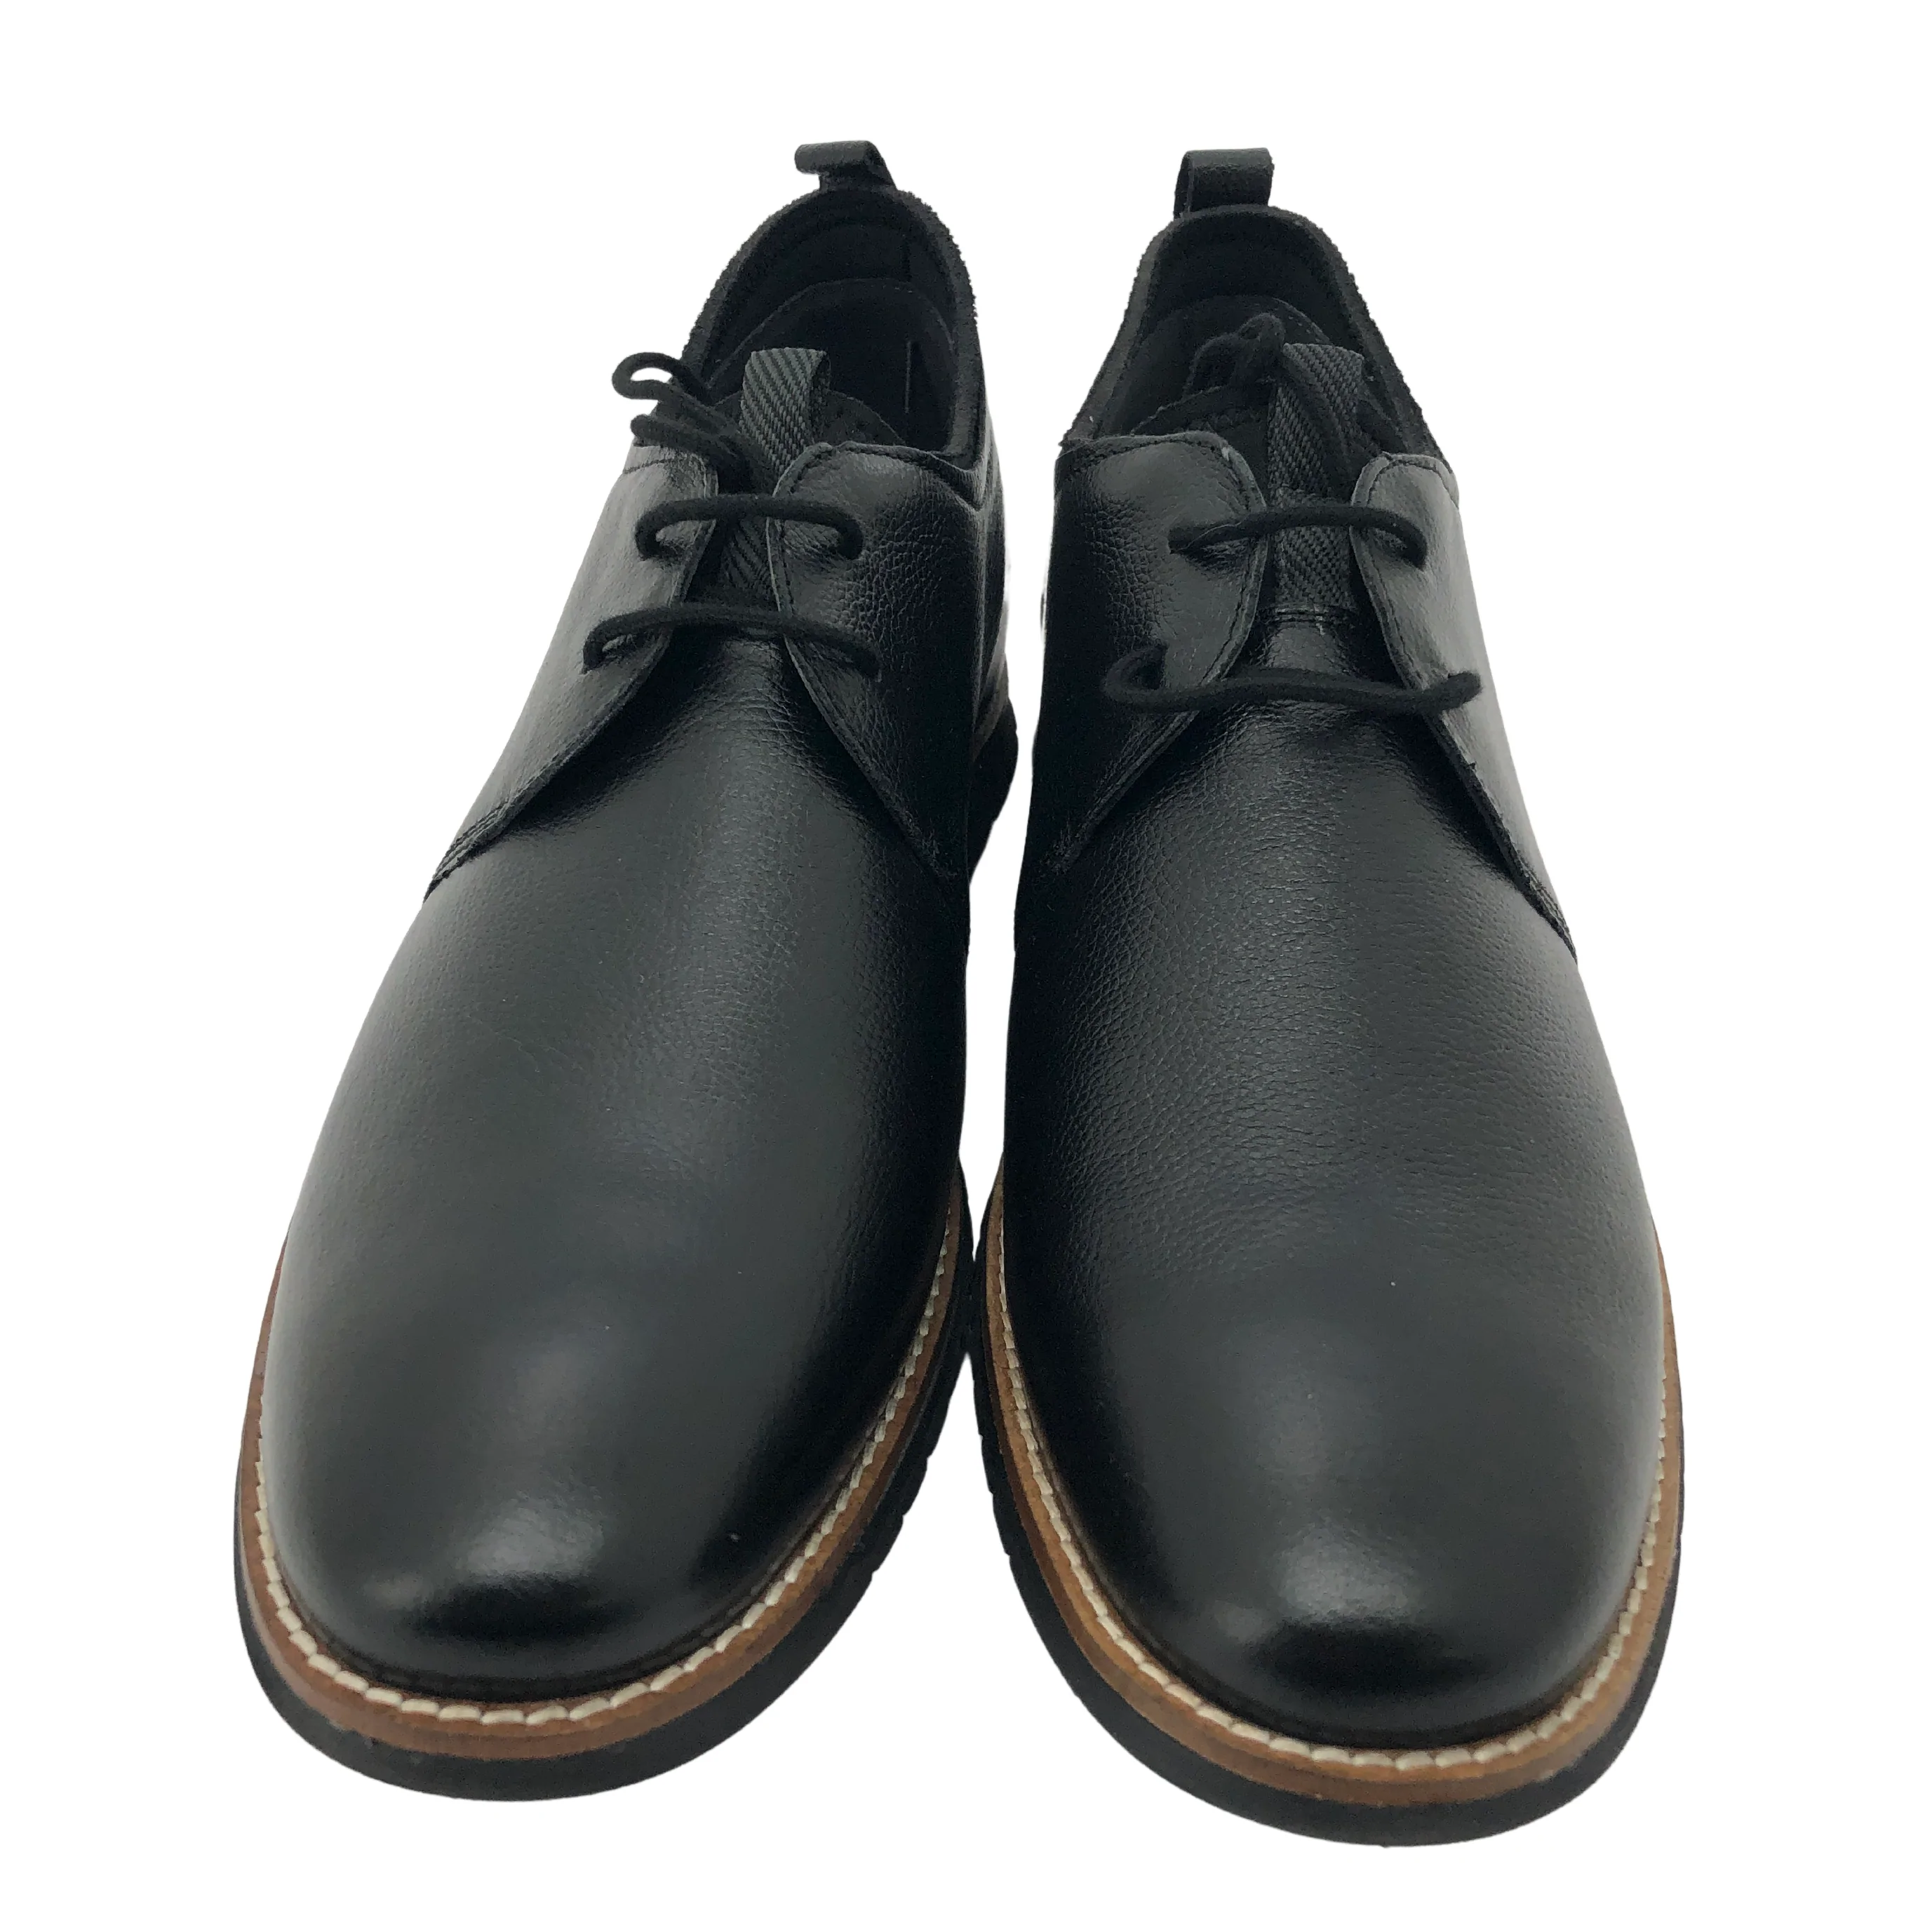 Hush Puppies Men's Dress Shoe / Oxford Style / Black / Various Sizes